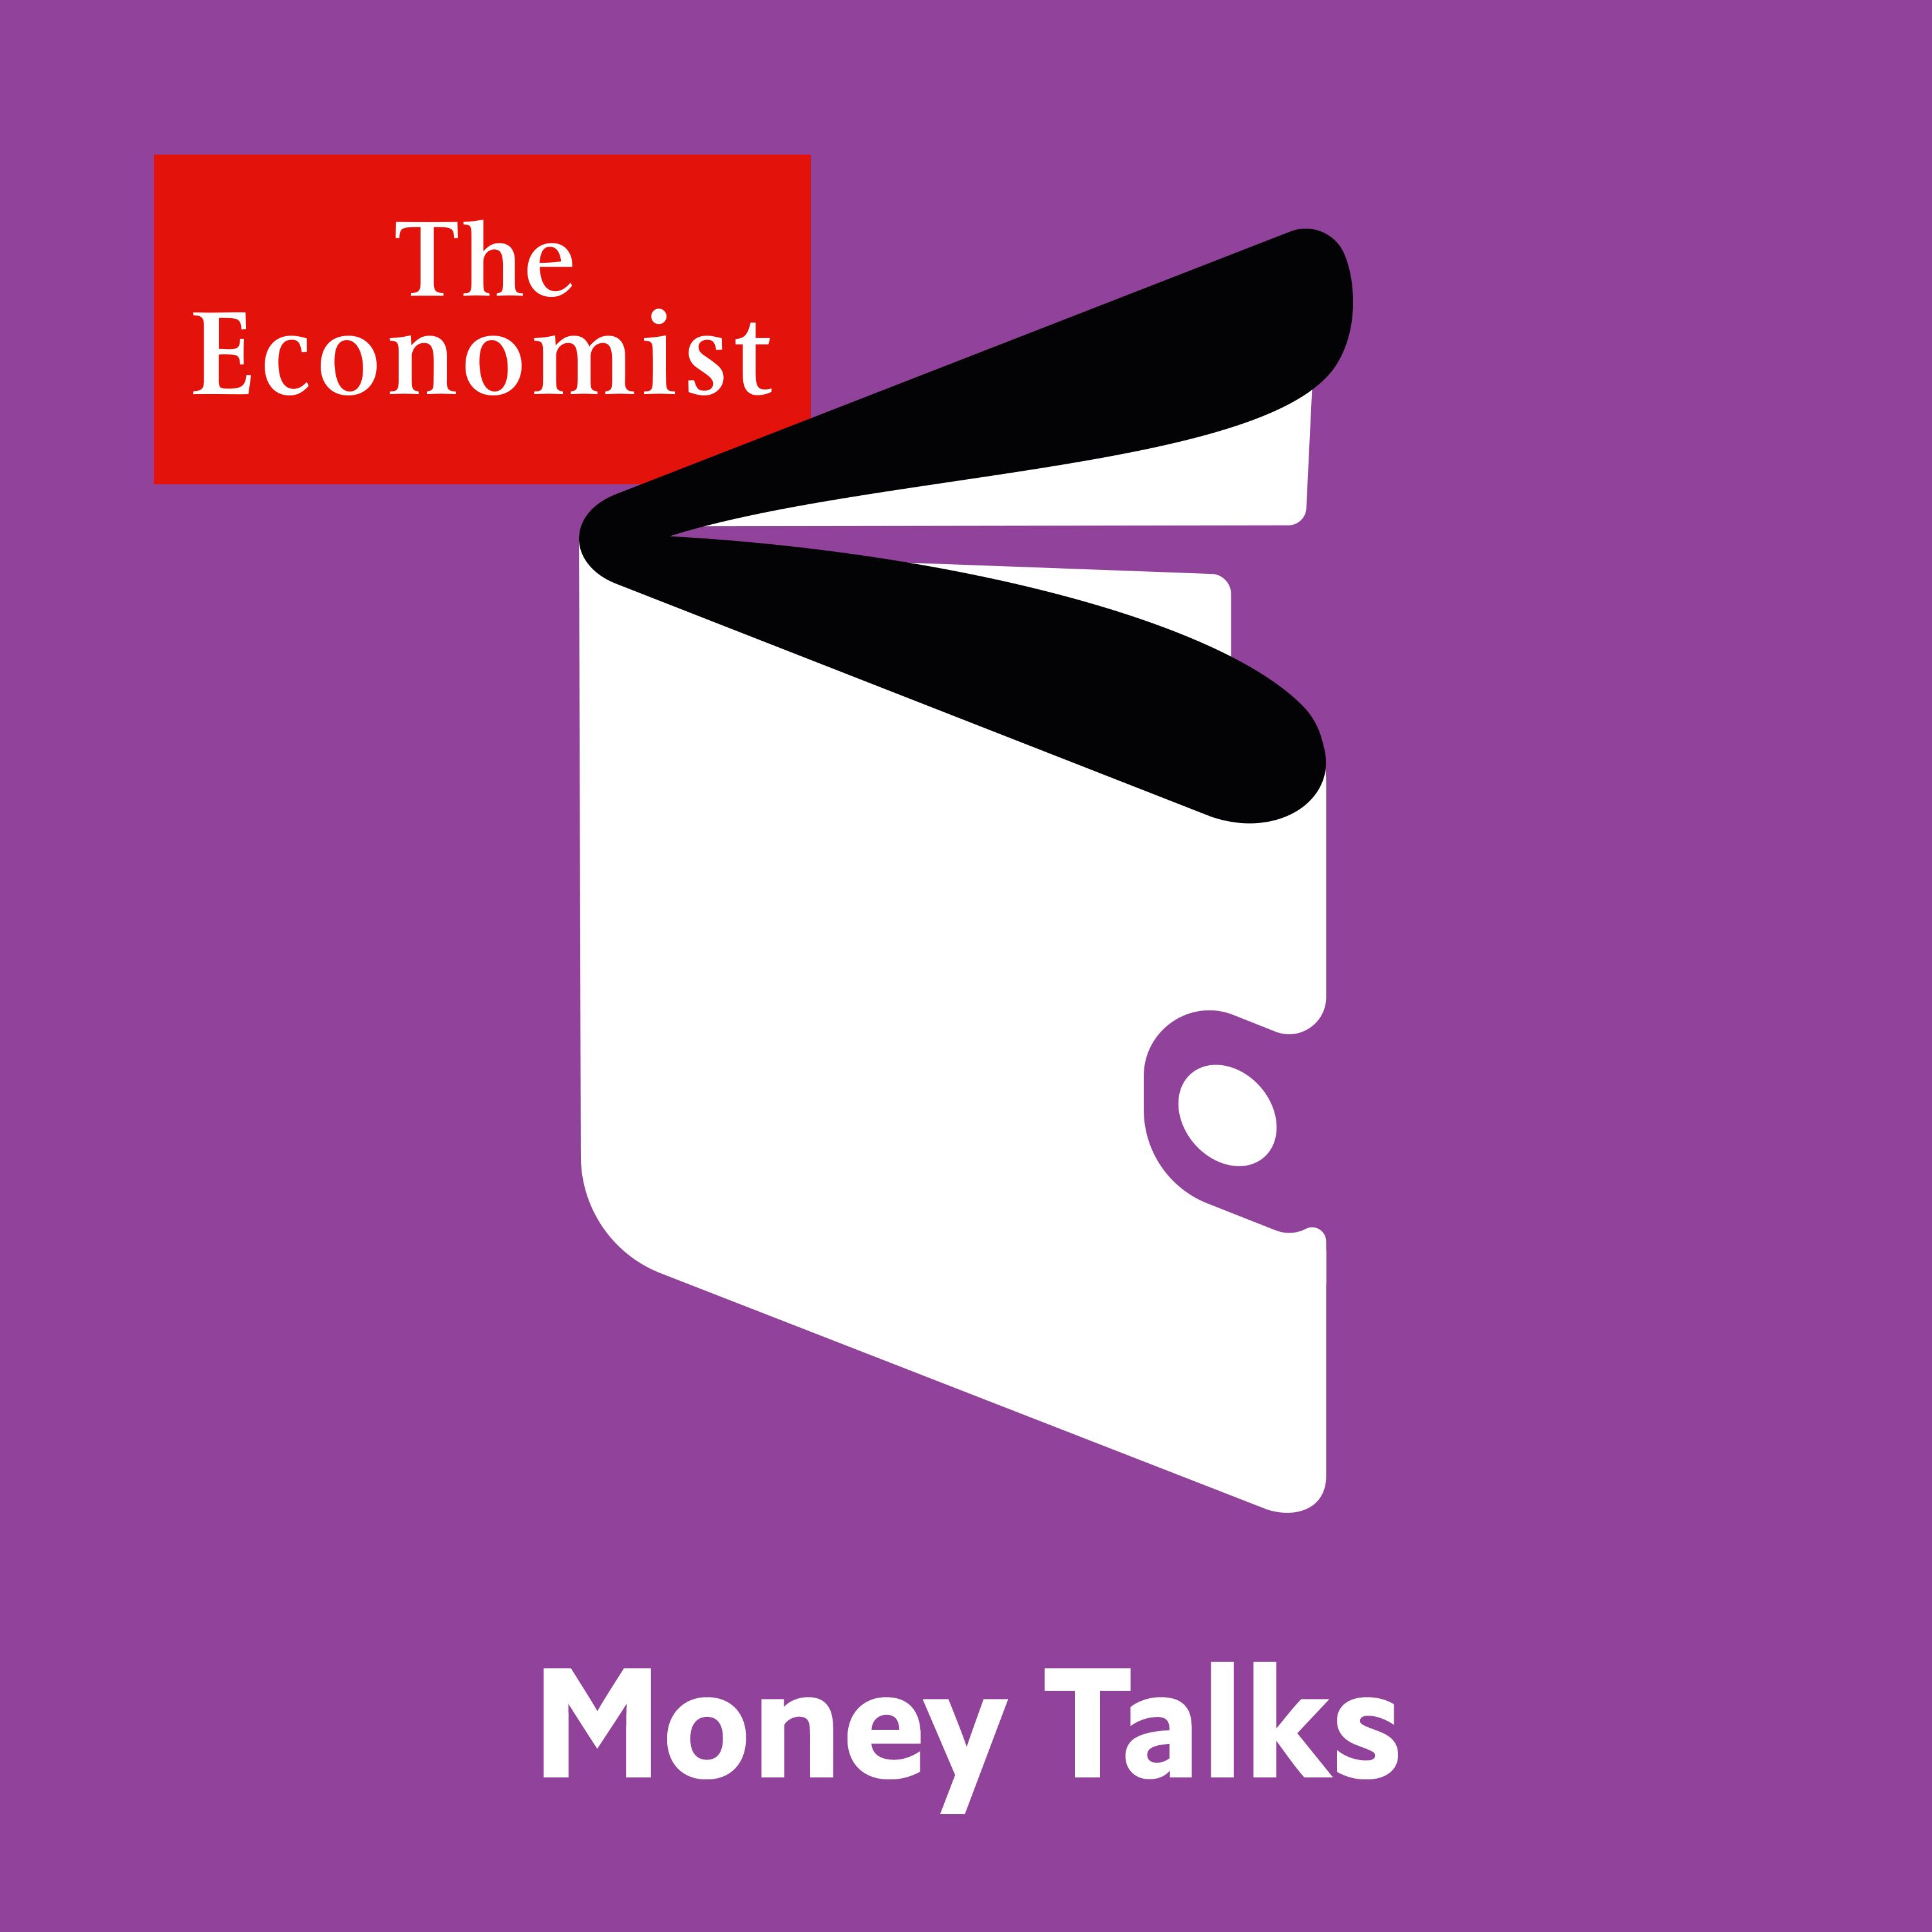 Money Talks: Meet the cryptokings